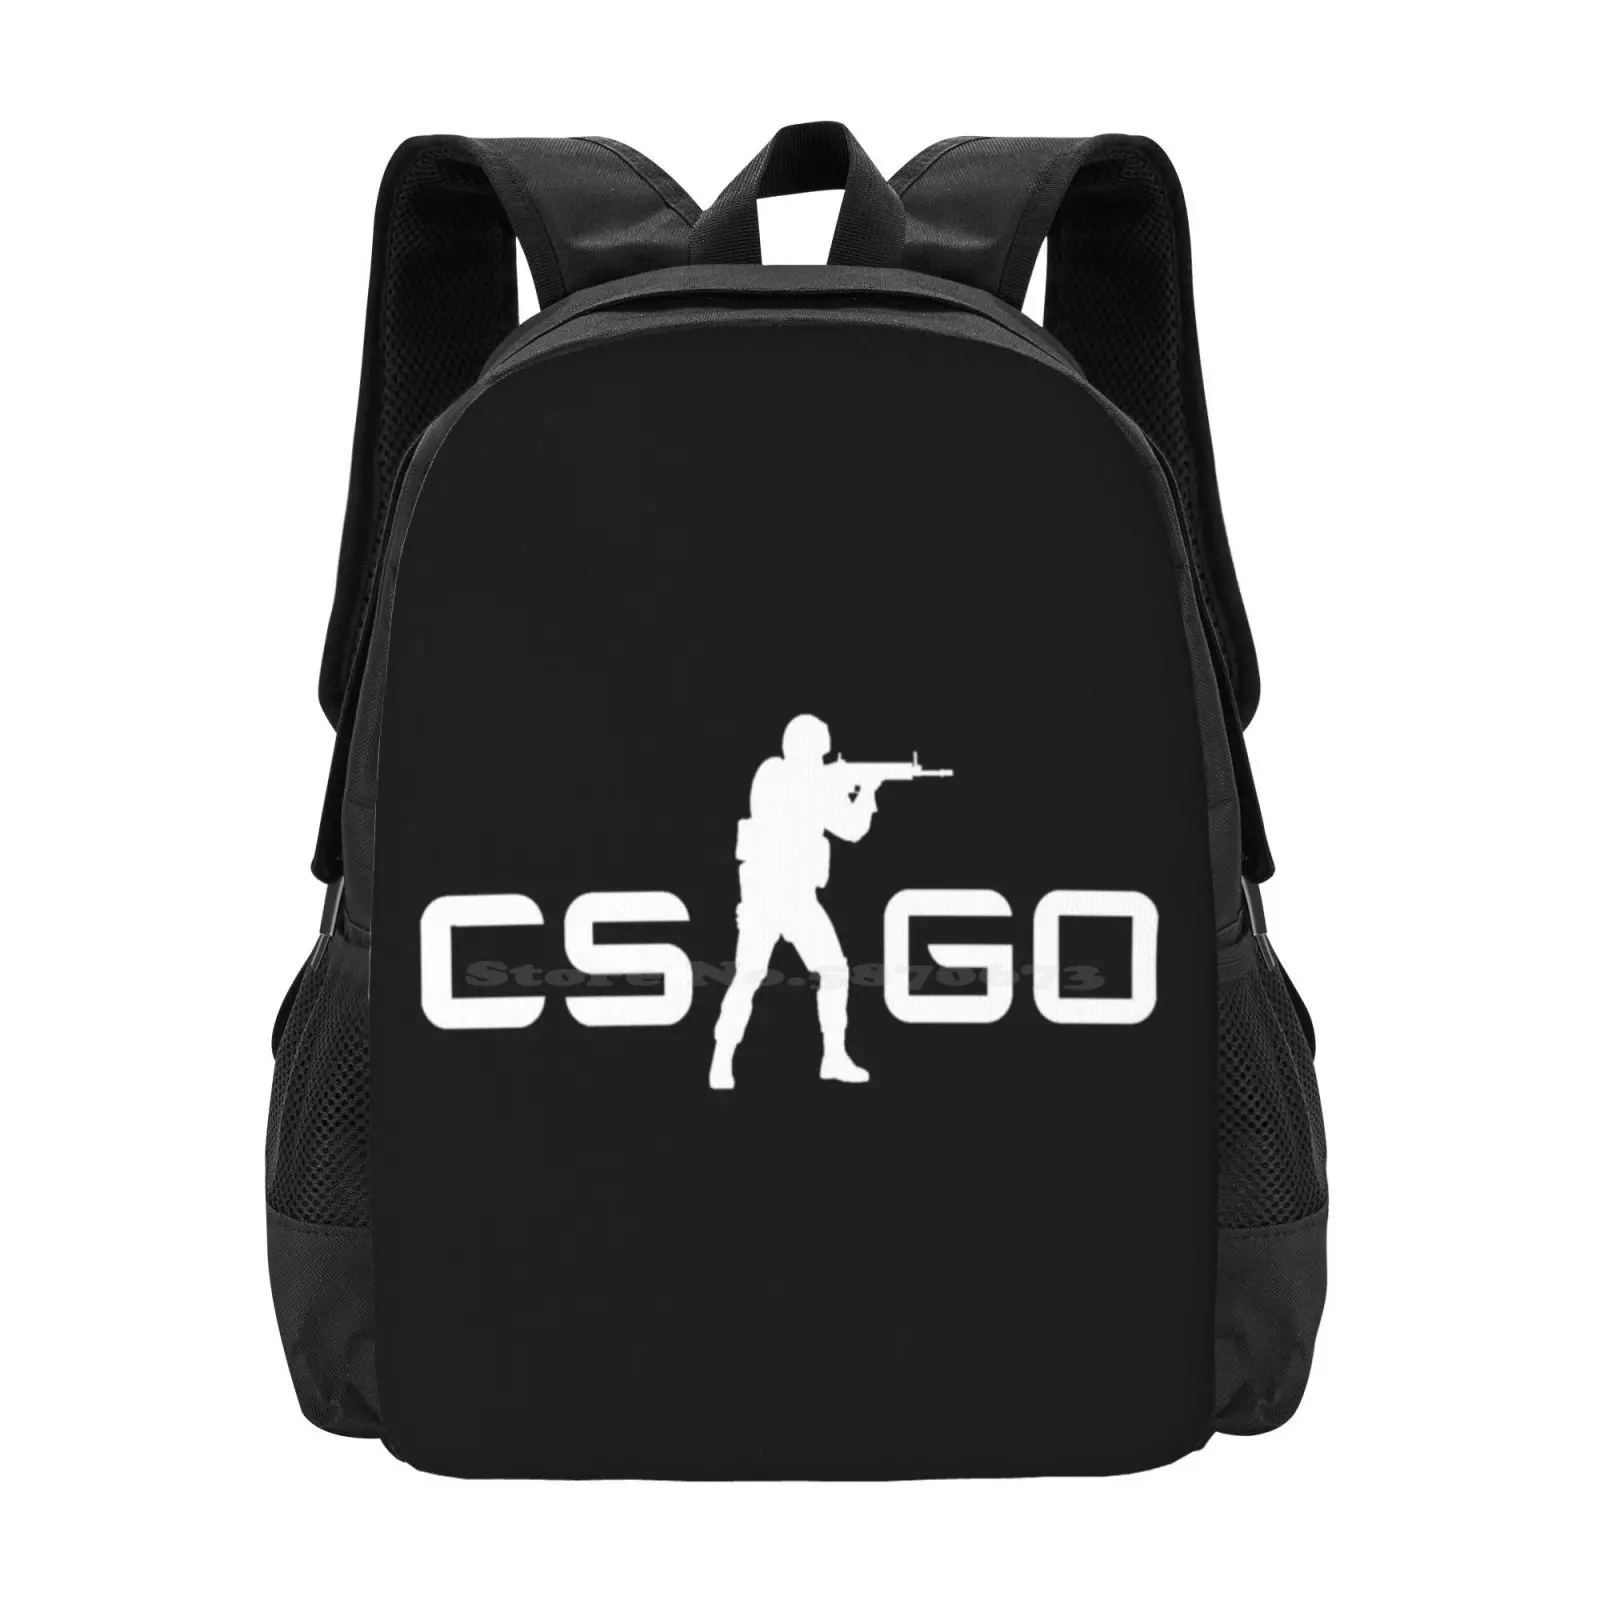 Csgo-White Fashion Pattern Design Travel Laptop School Backpack Bag Csgo Cs Go Counterstrike Css Statrak Stattrak